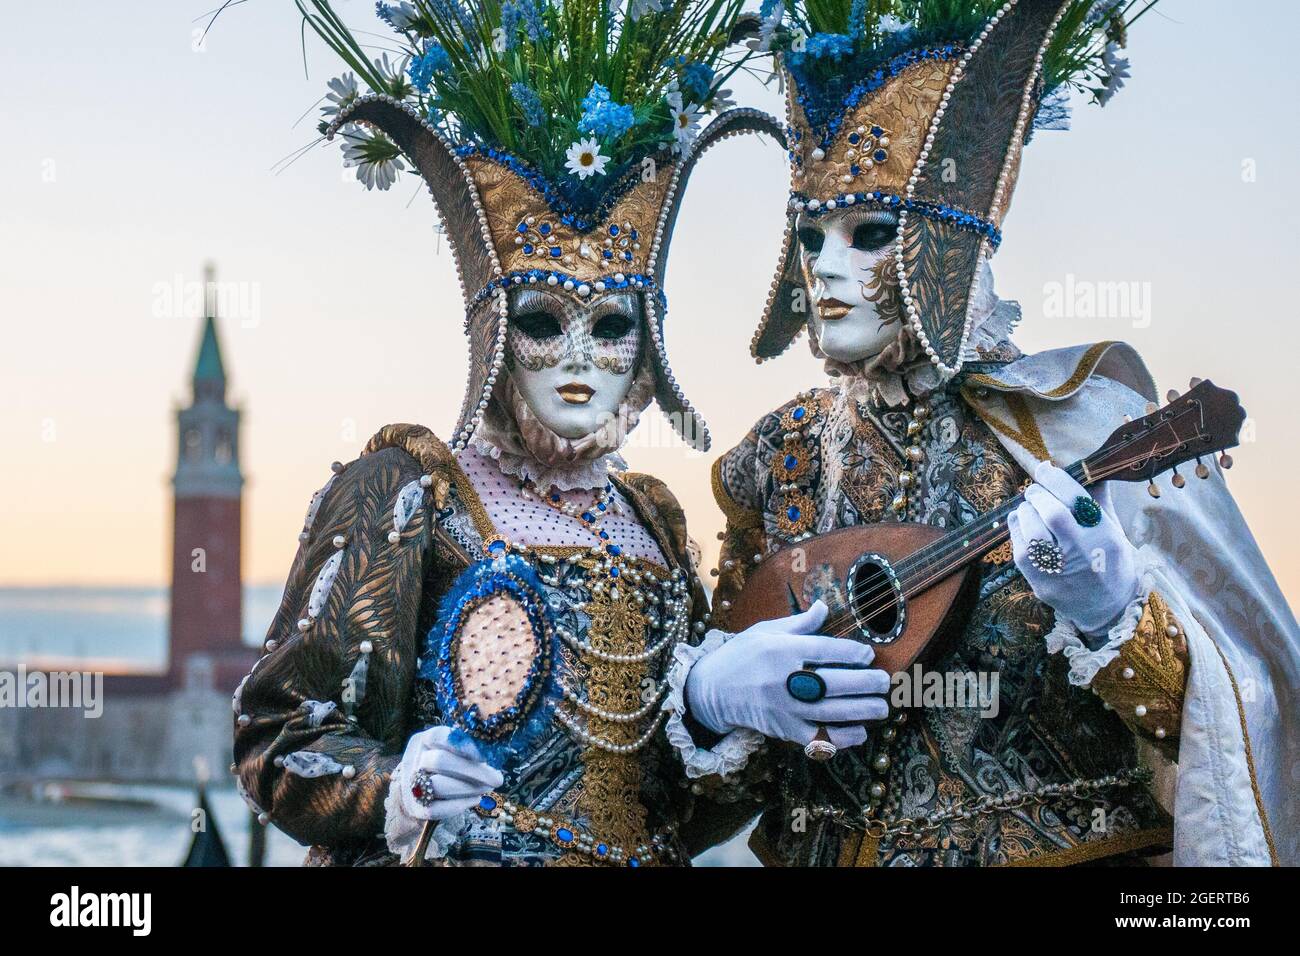 Maschere, cappelli e costumi di carnevale maschili e femminili a Venezia  Foto stock - Alamy